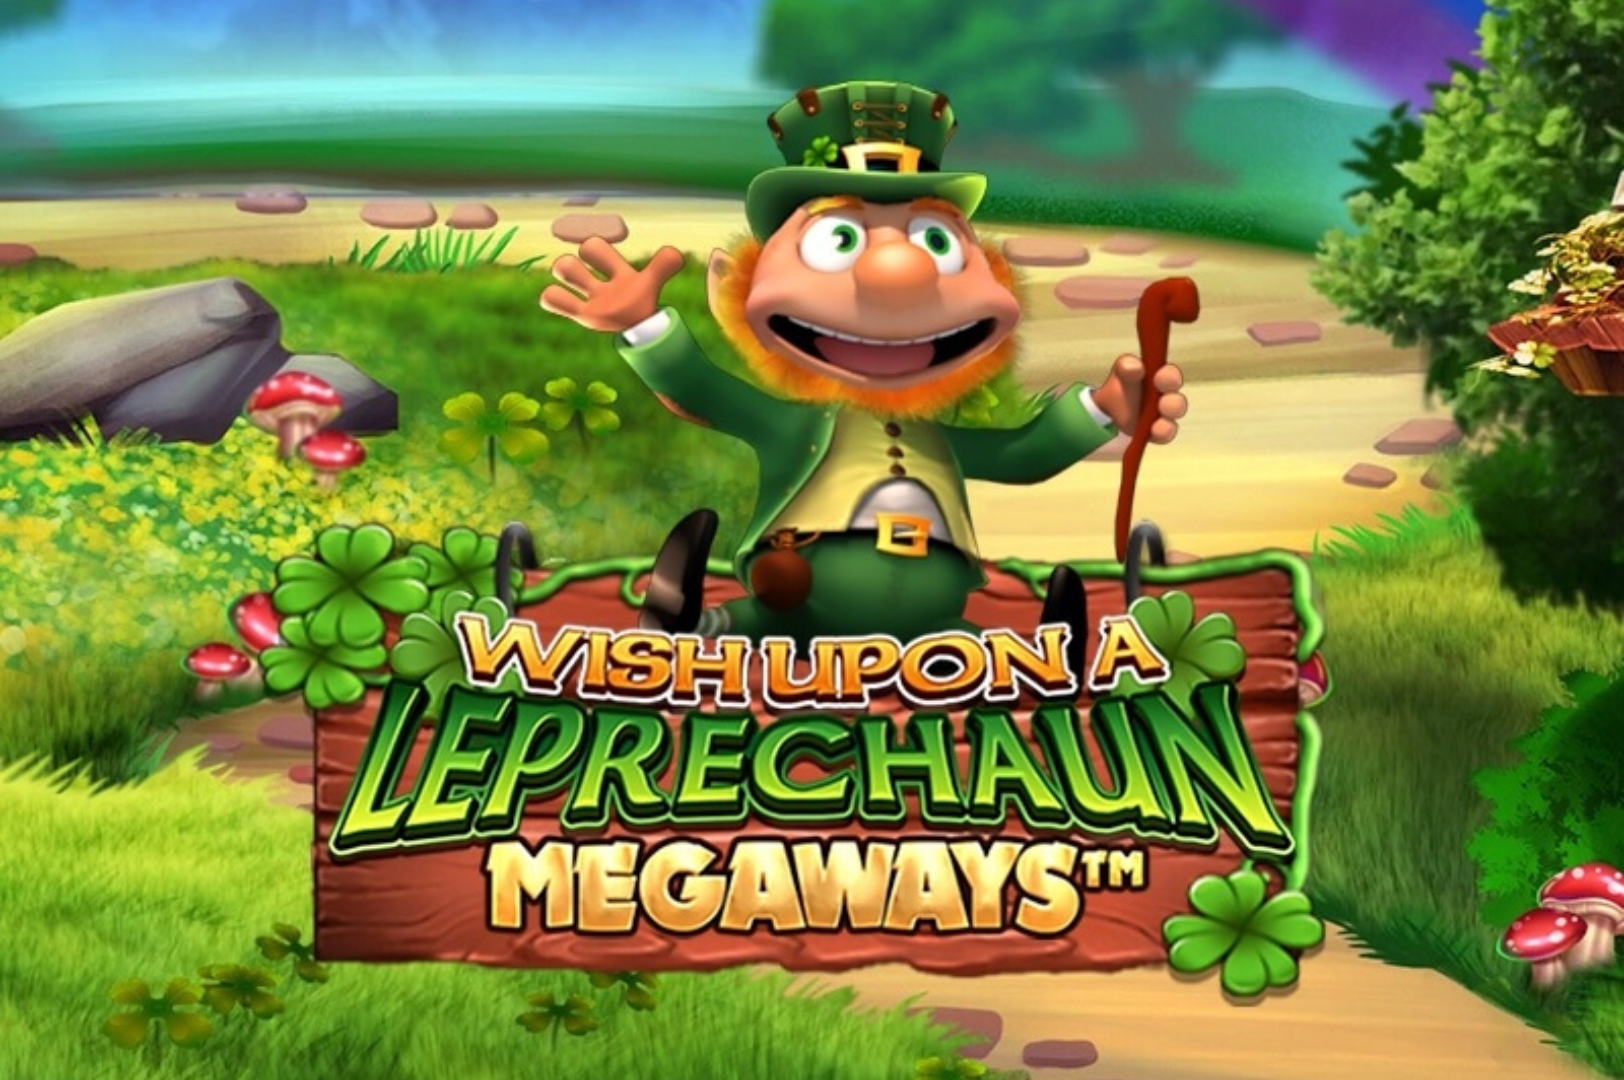 Wish Upon A Leprechaun Megaways Slot